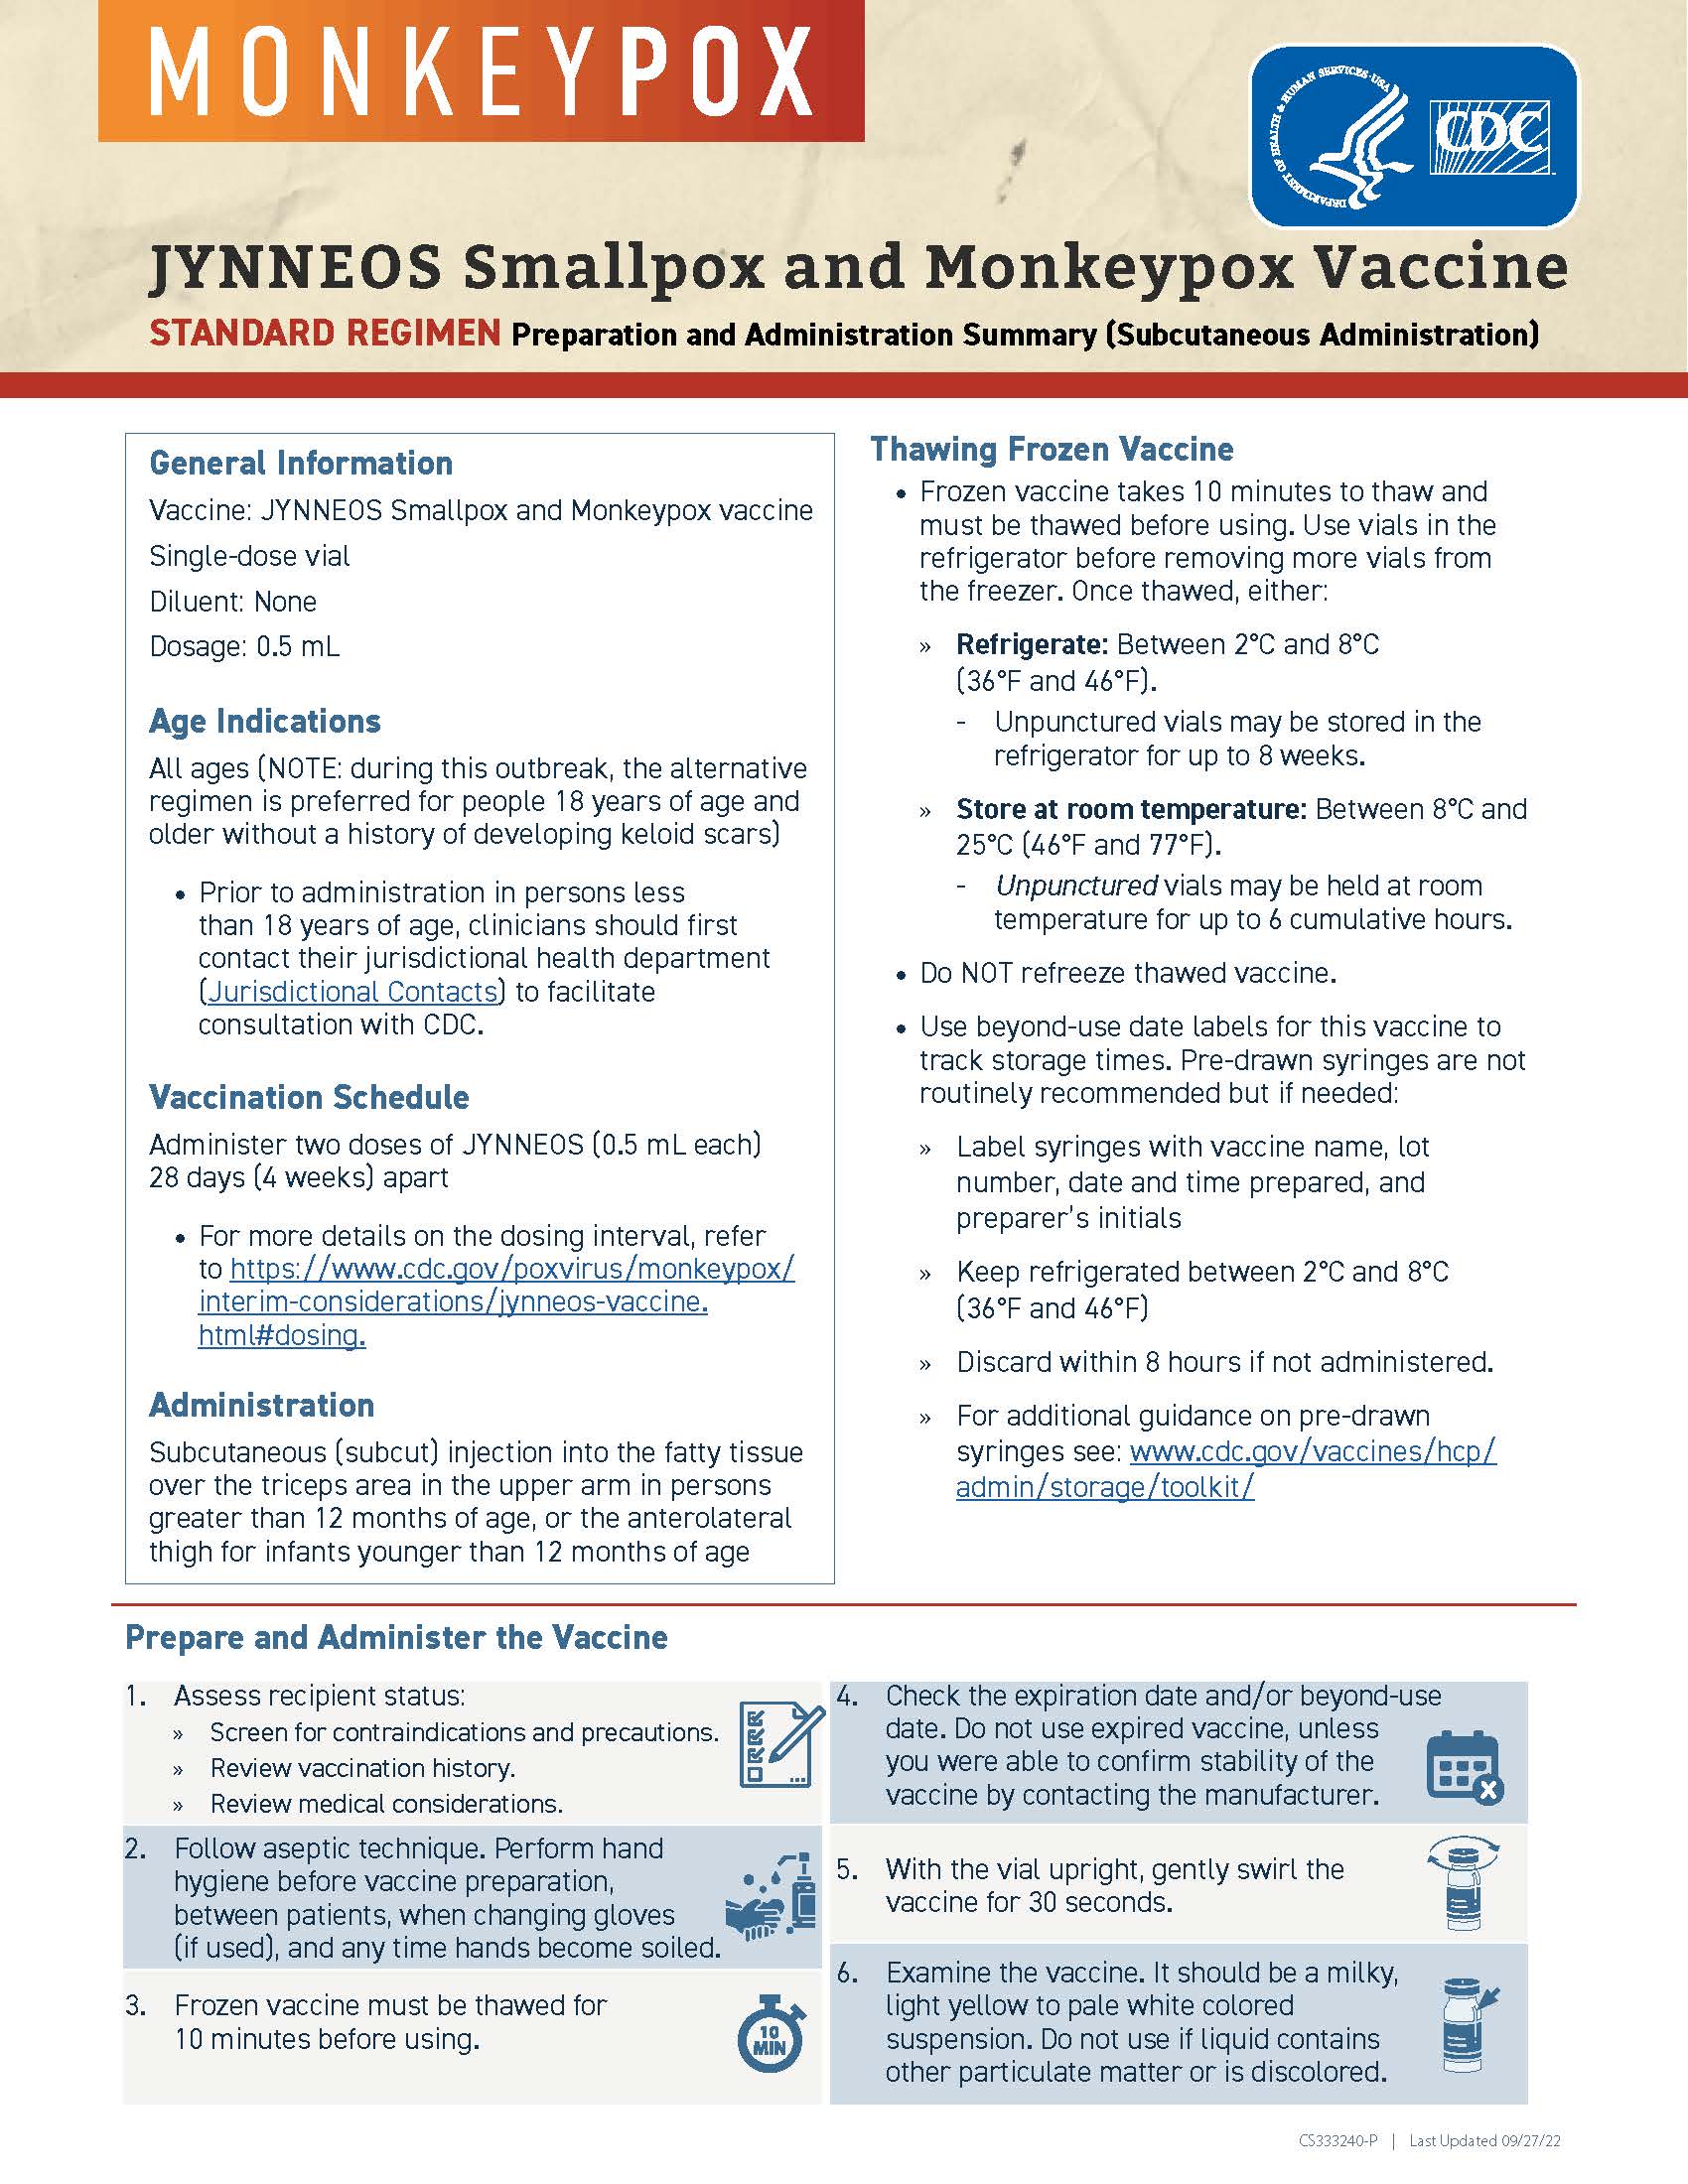 JYNNEOS Preparation and Administration (Standard Regimen), PDF thumbnail